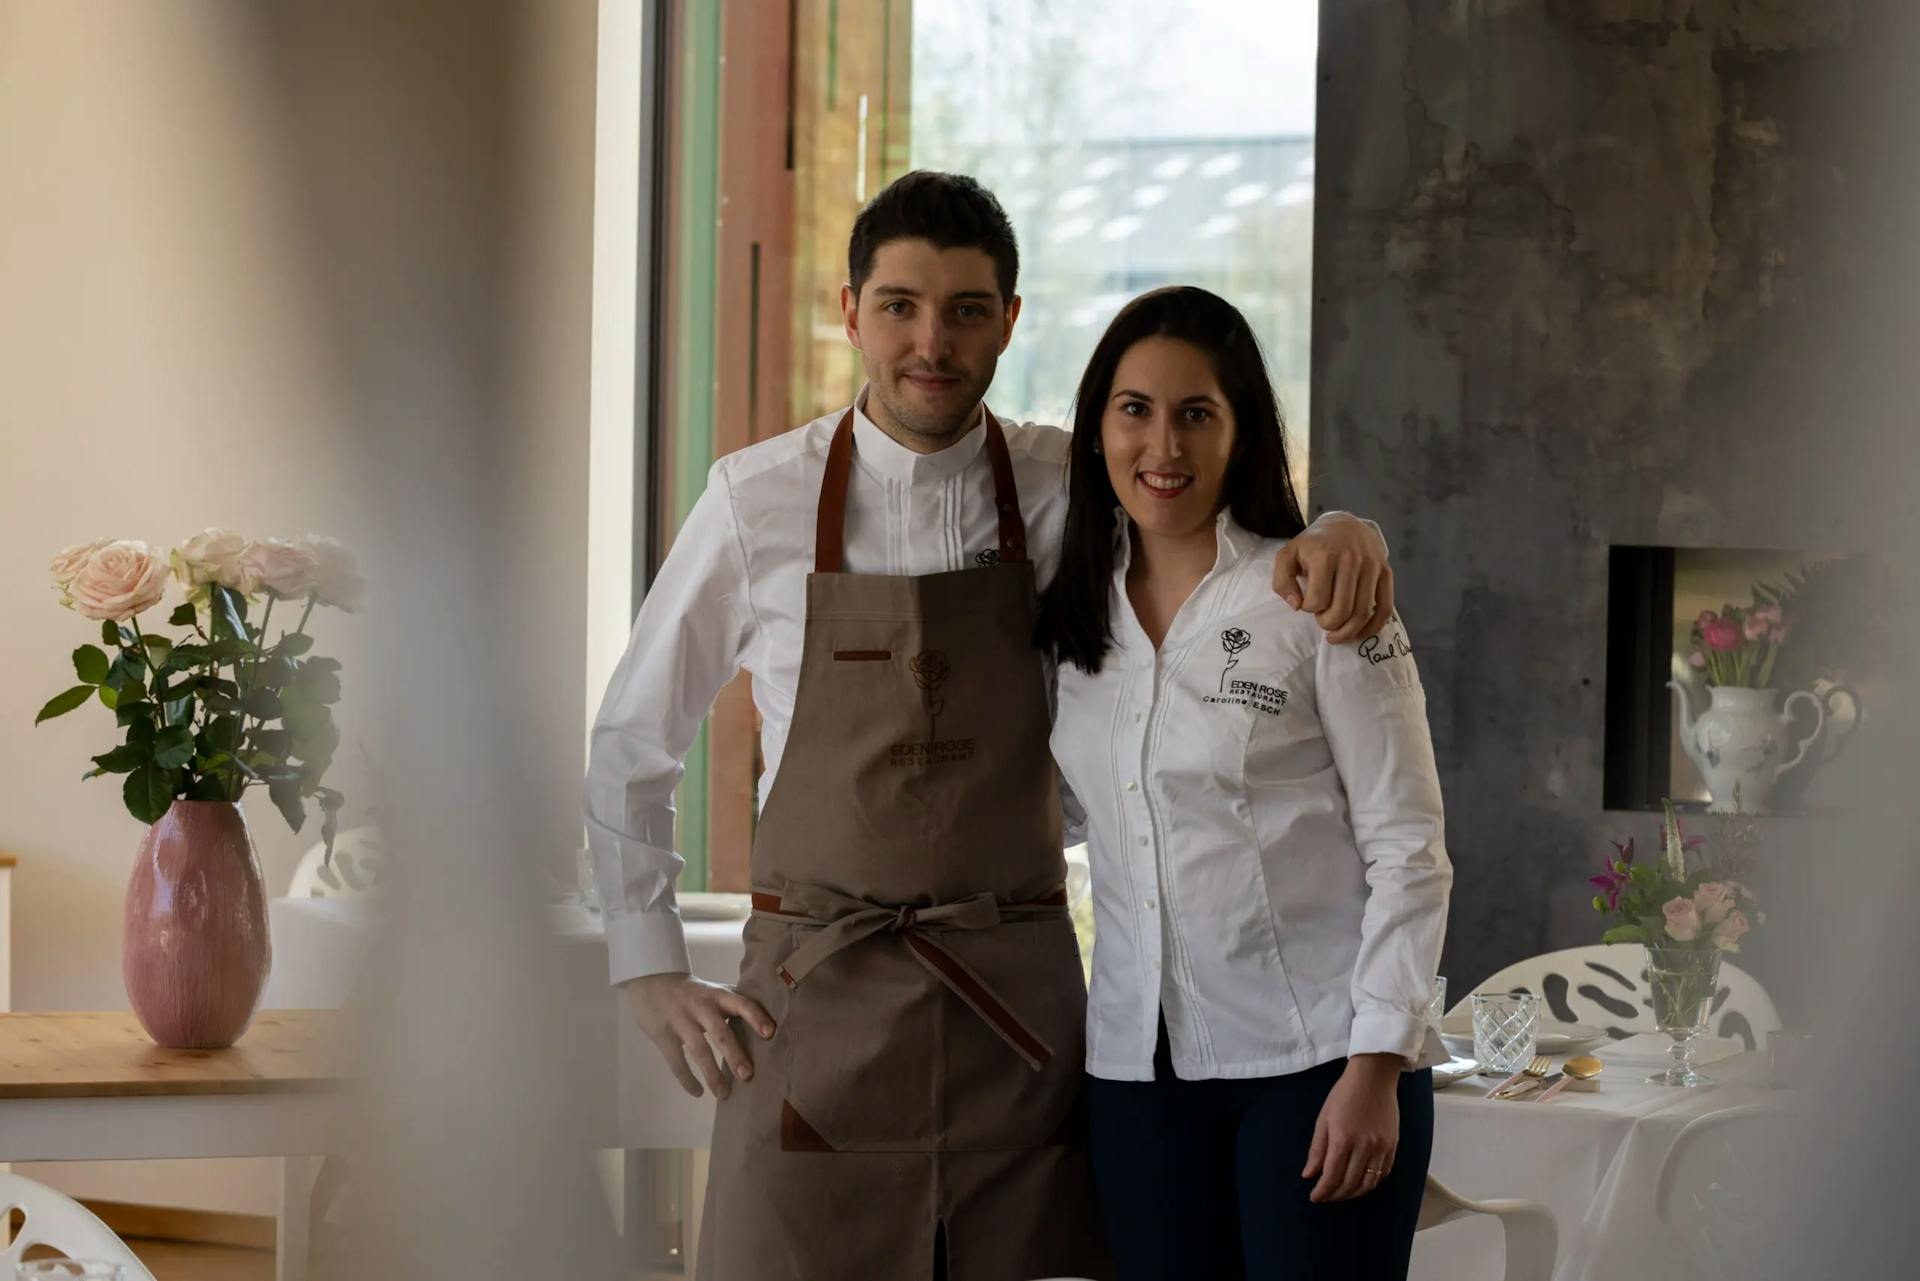 Caroline Asch and Valérien Pradé, chefs of the restaurant. Photo from Eden Rose website.